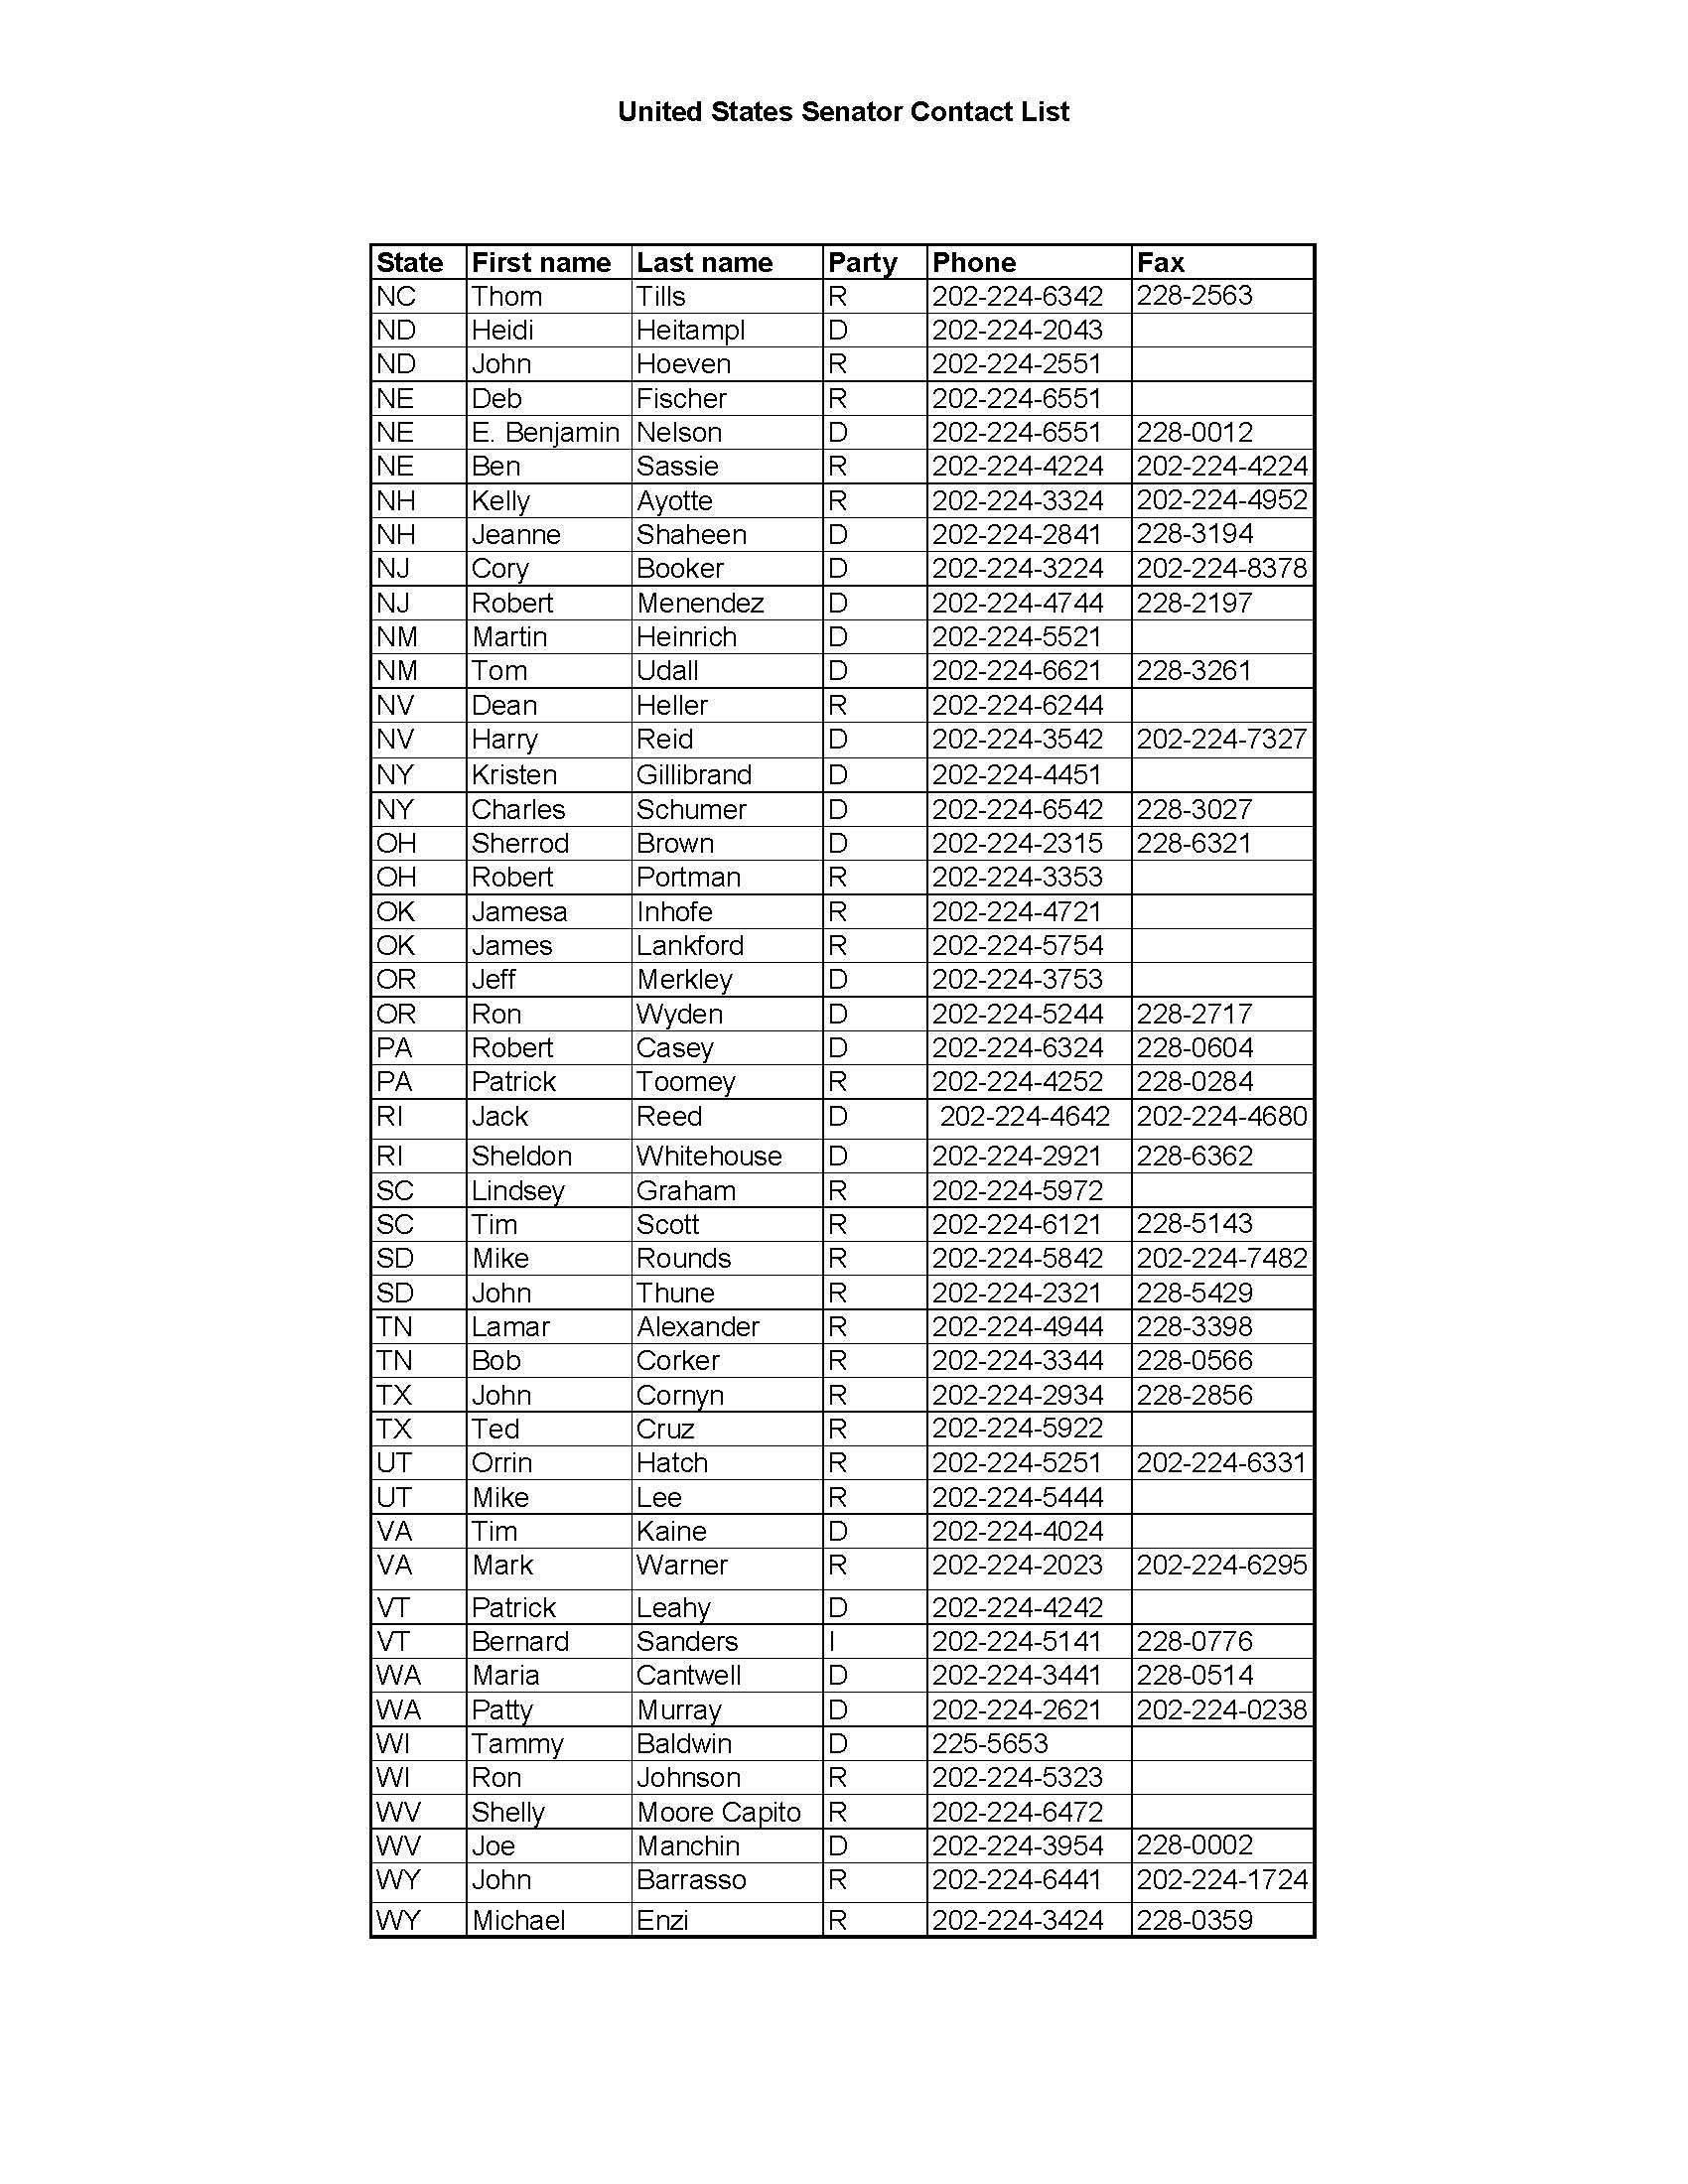 Senate spreadsheet 2015_Page_2